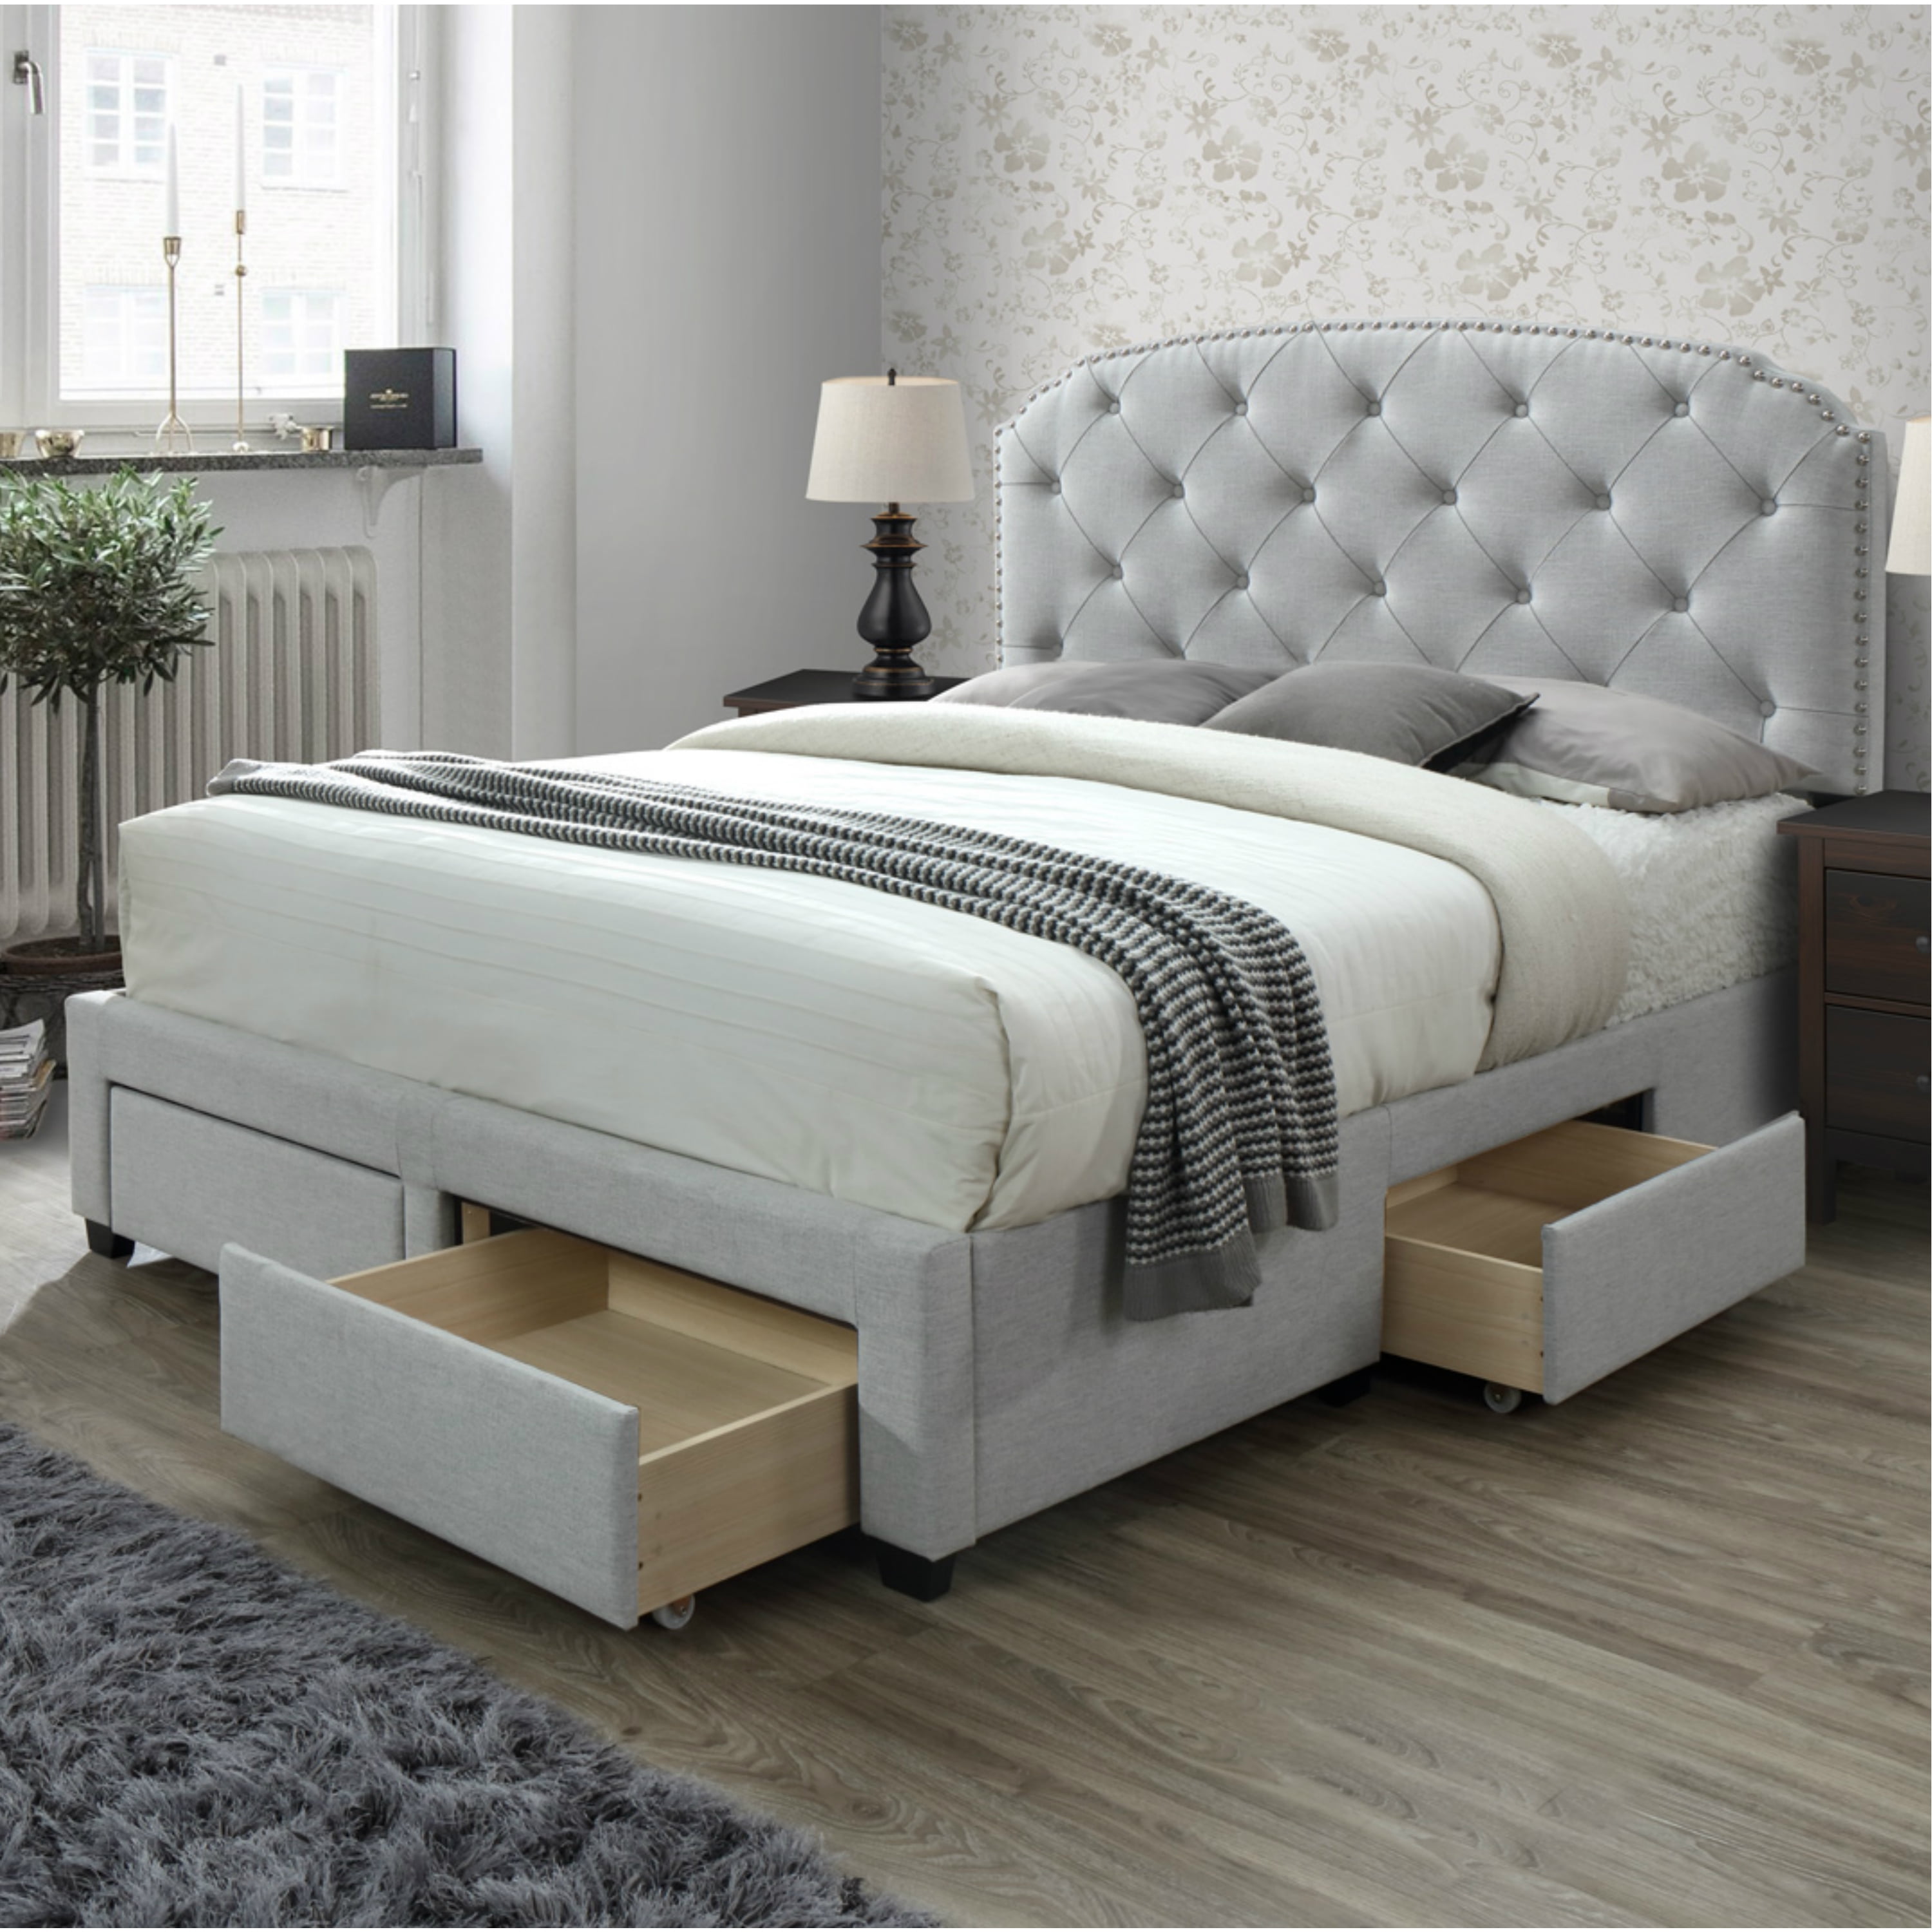 DG Casa Argo Tufted Upholstered Panel Bed Frame with